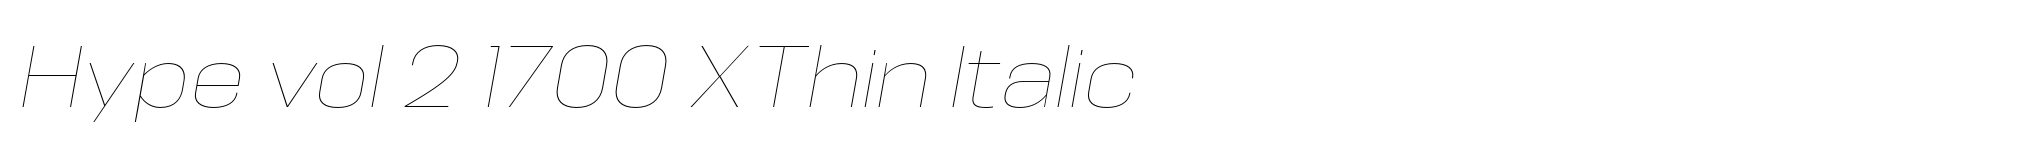 Hype vol 2 1700 XThin Italic image